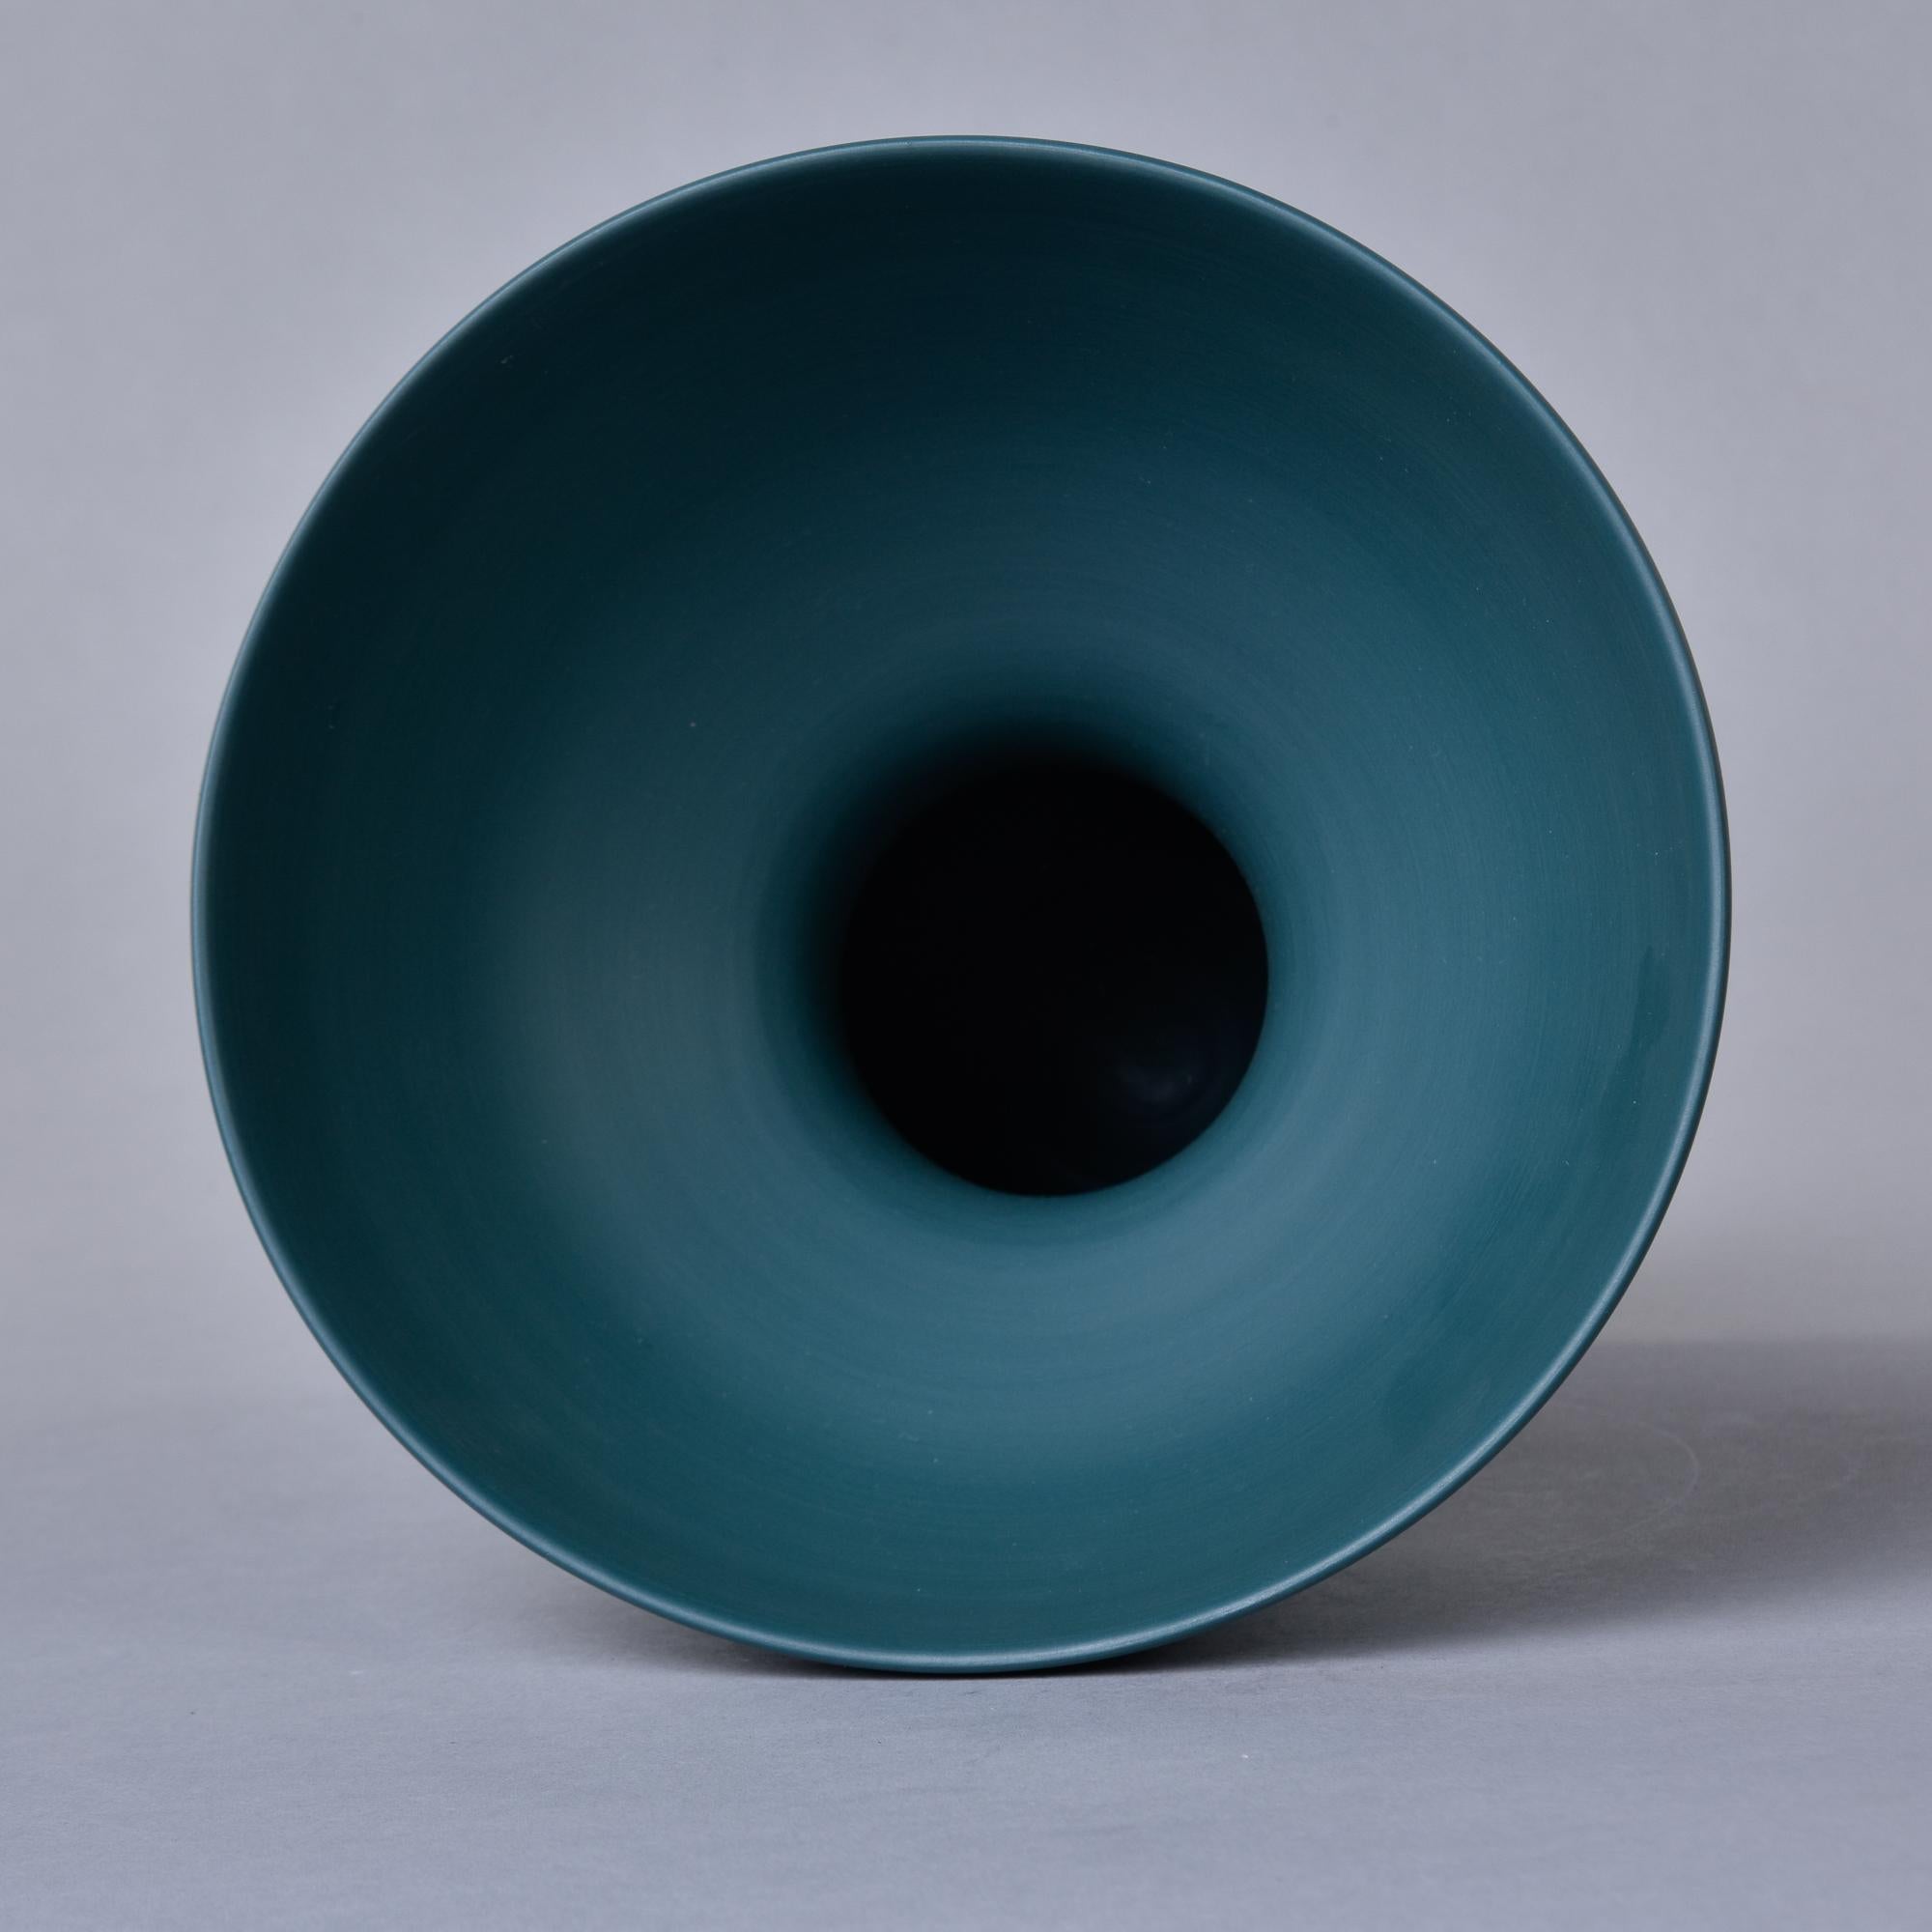 Ceramic Rina Menardi Bouquet Vase in Teal Green Glaze For Sale